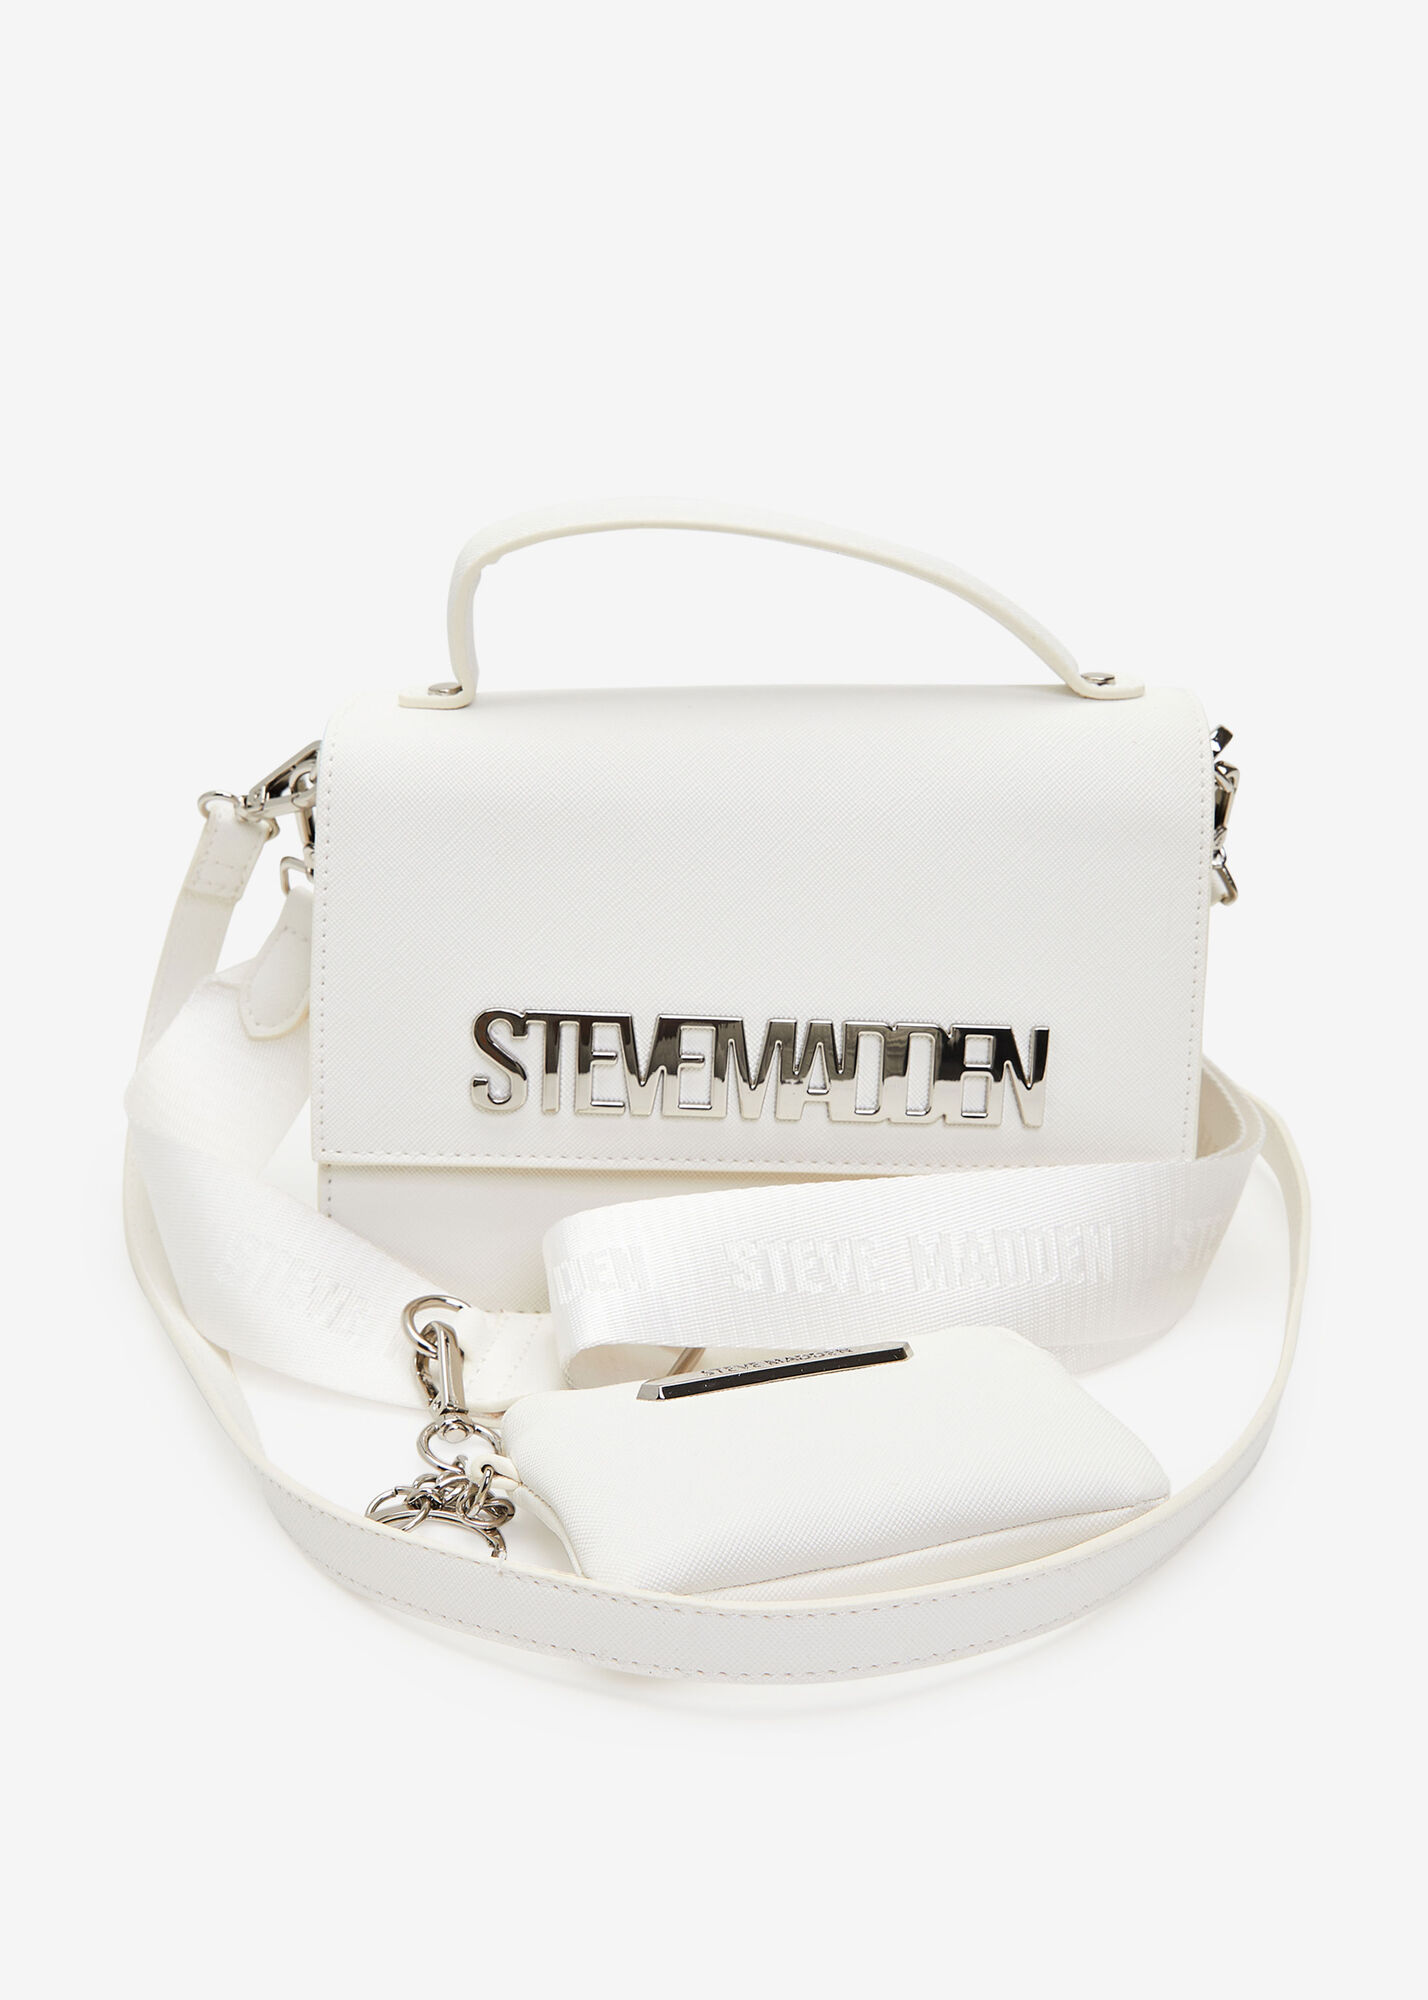 Handbags & Purses on Clearance  Steve Madden Handbags & Purses Sale